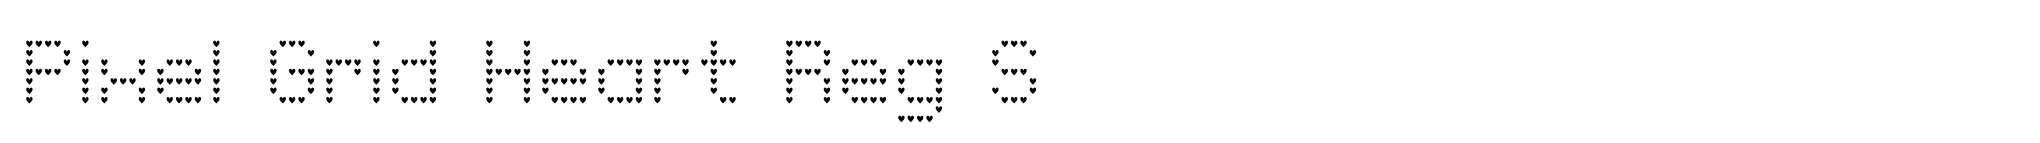 Pixel Grid Heart Reg S image